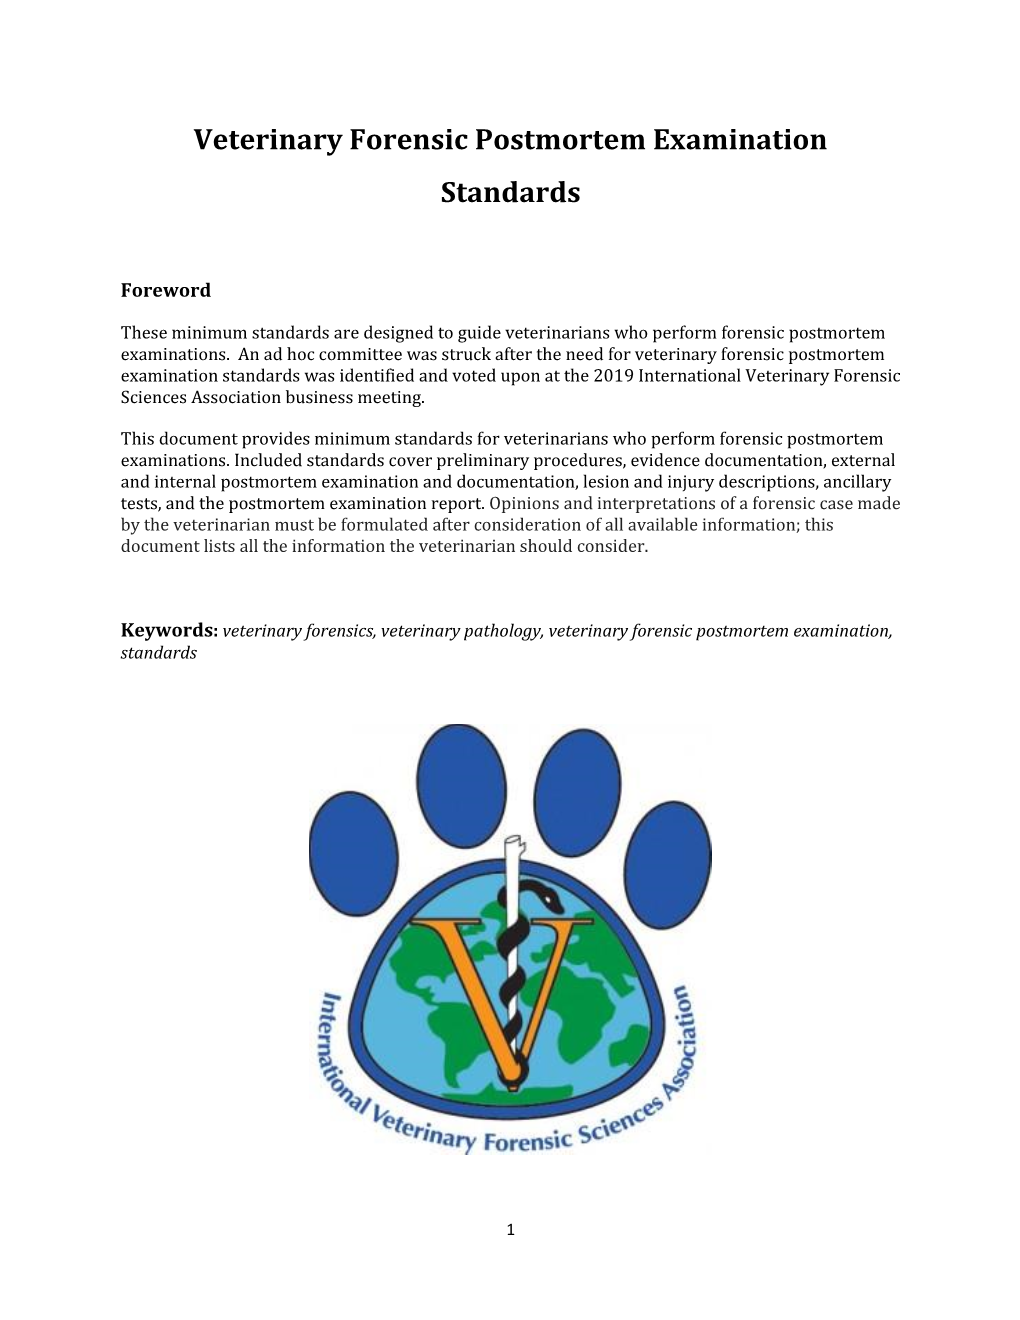 Veterinary Forensic Postmortem Examination Standards